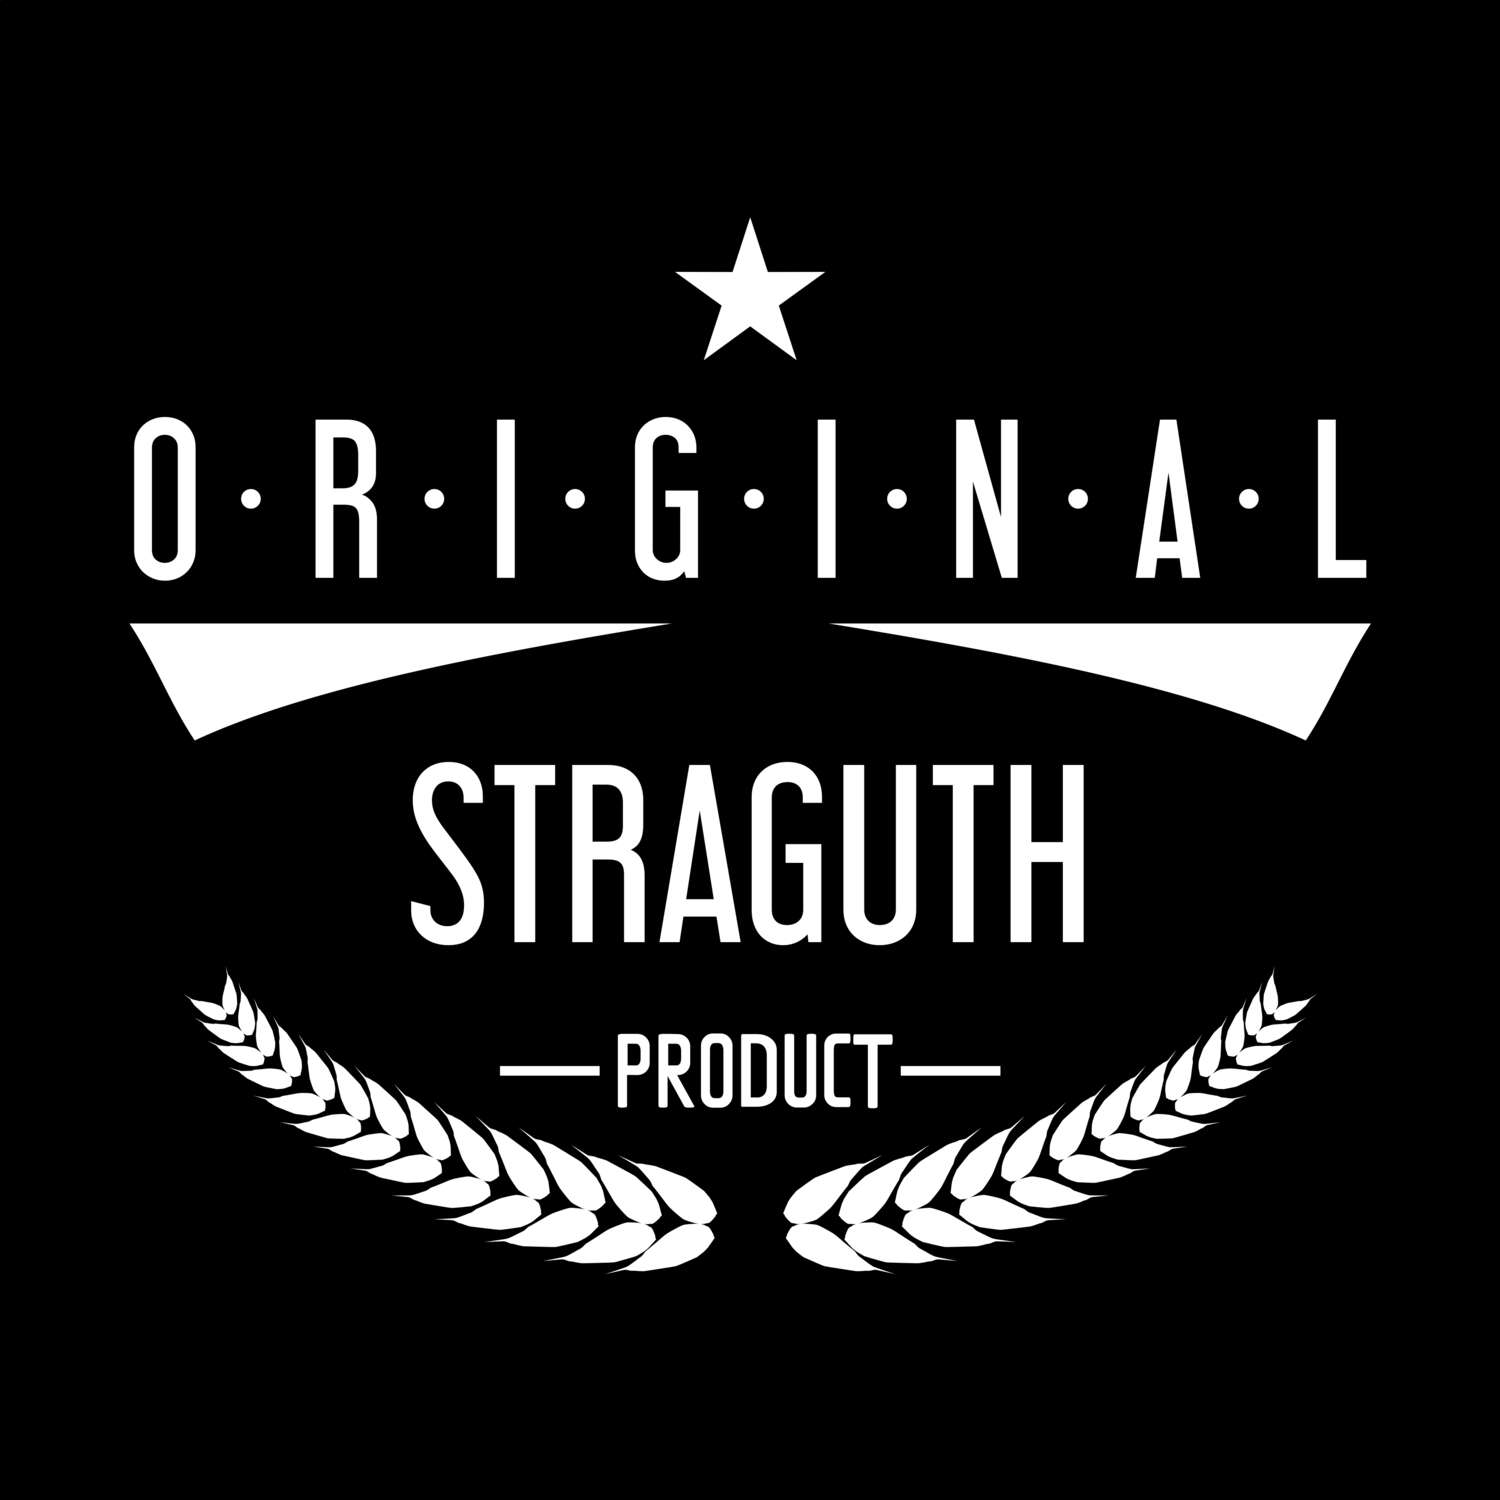 Straguth T-Shirt »Original Product«